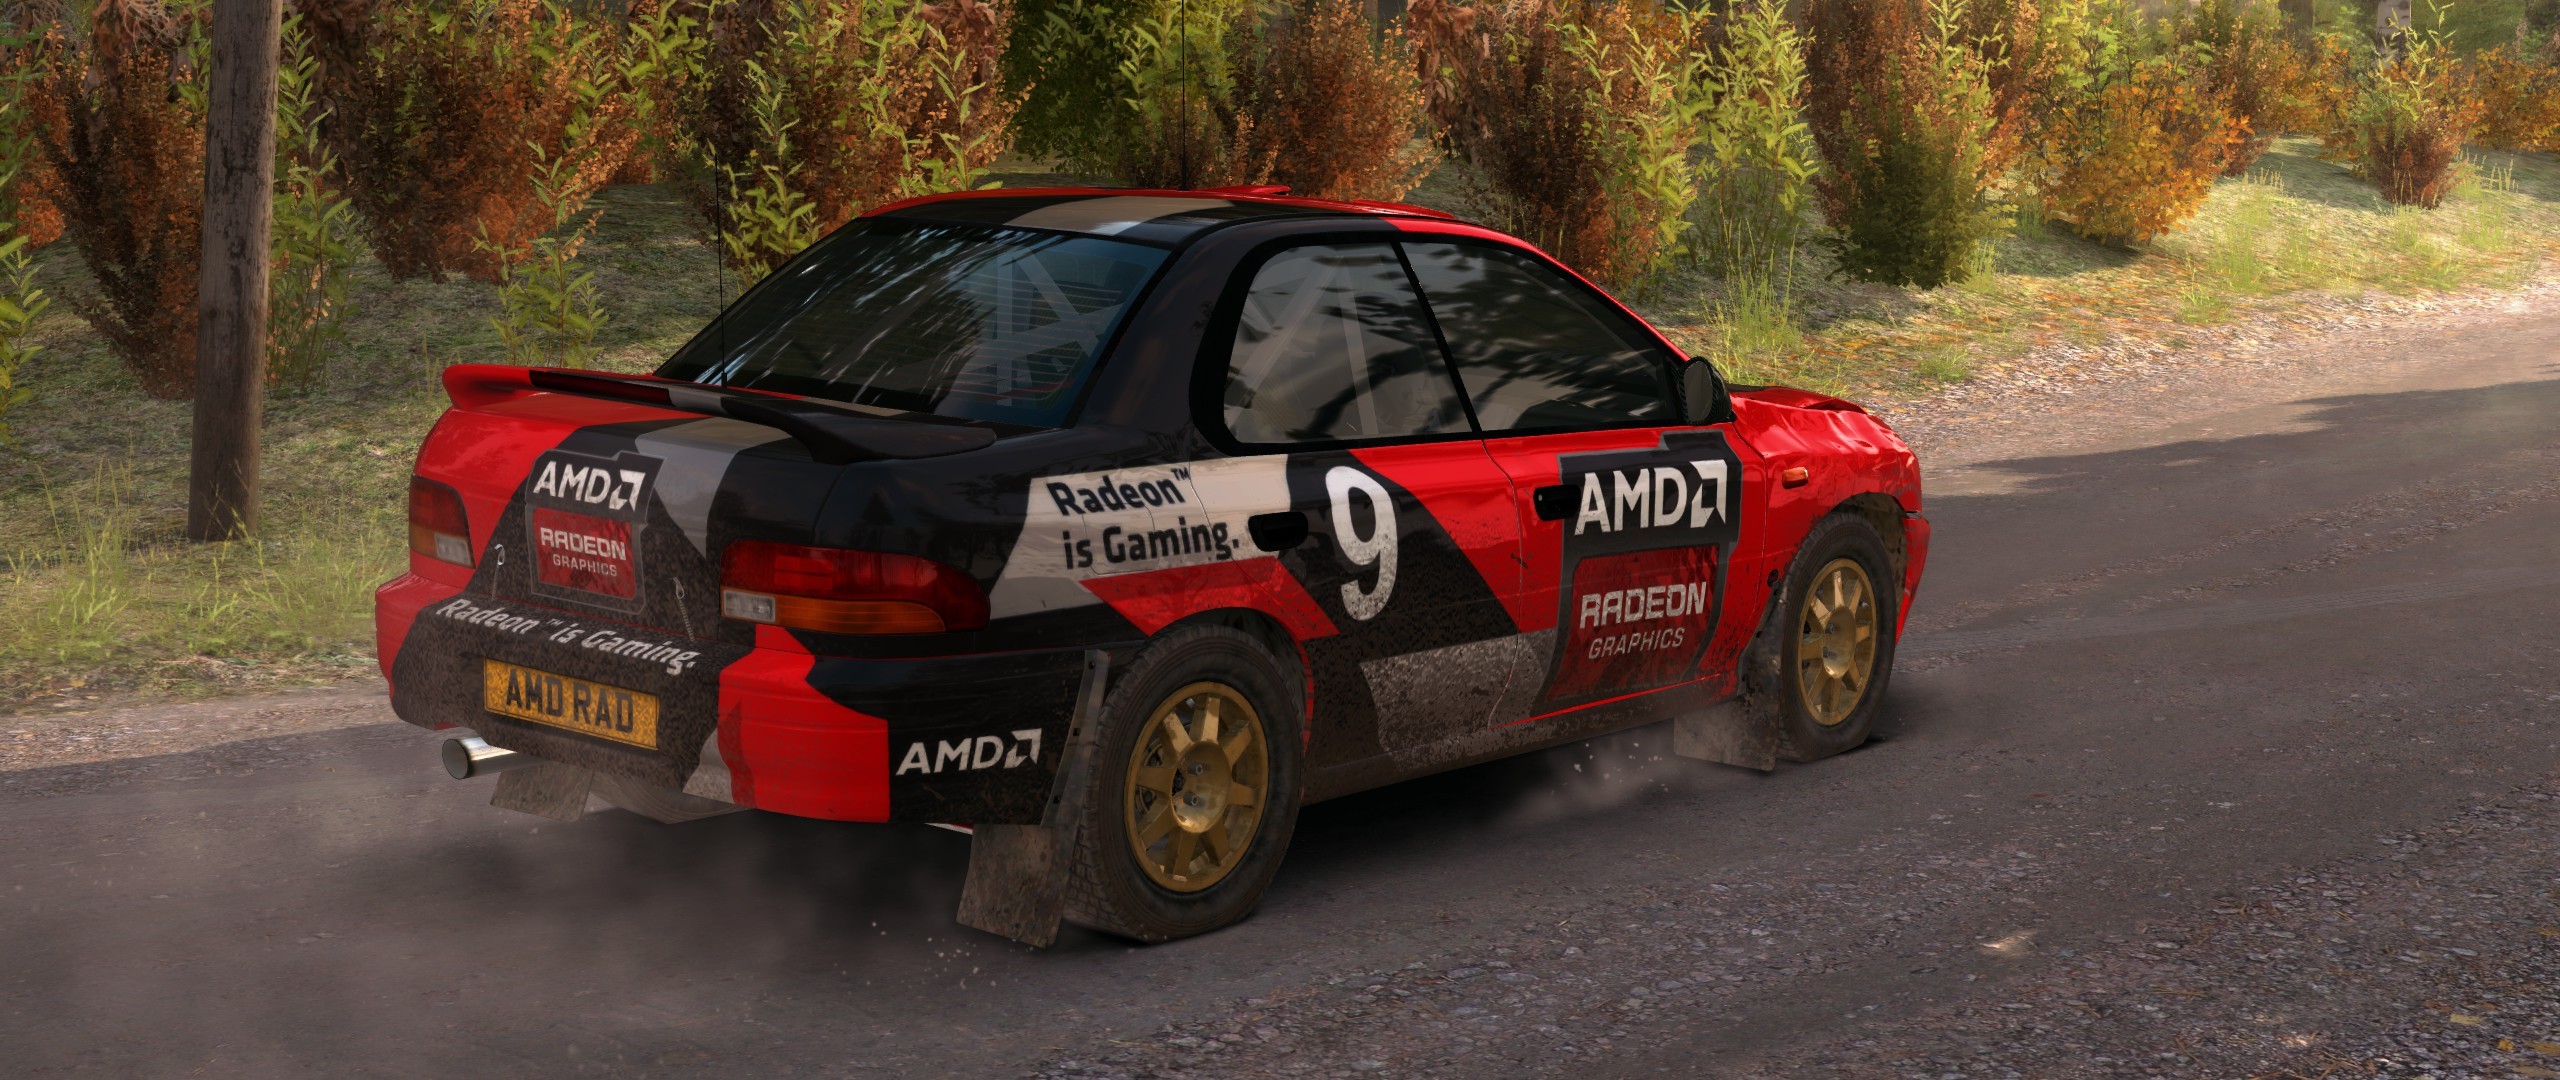 DiRT Rally AMD Subaru 2560x1080